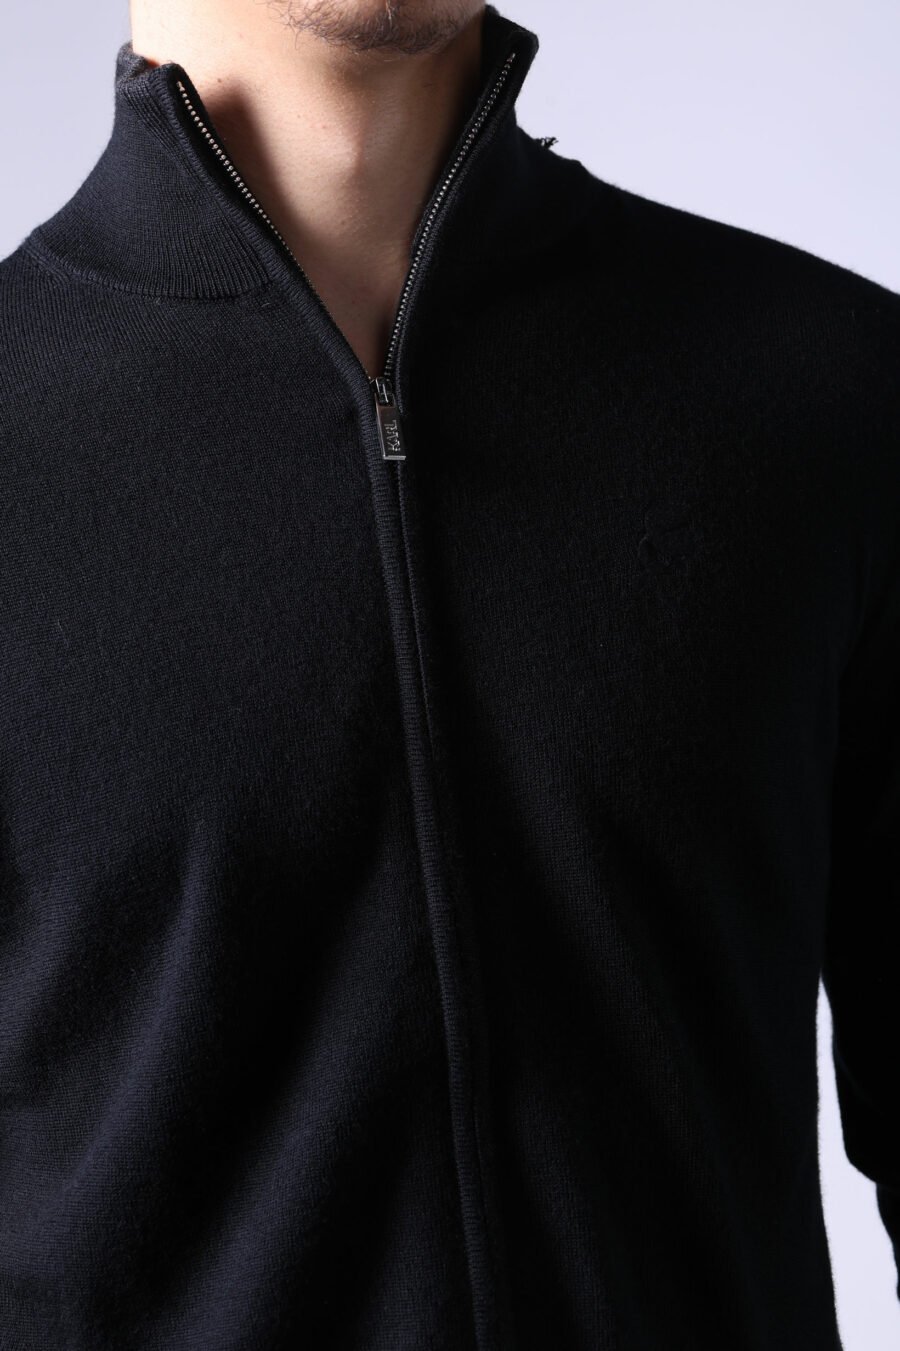 Black sweatshirt with zip and monochrome minilogue - Untitled Catalog 05789